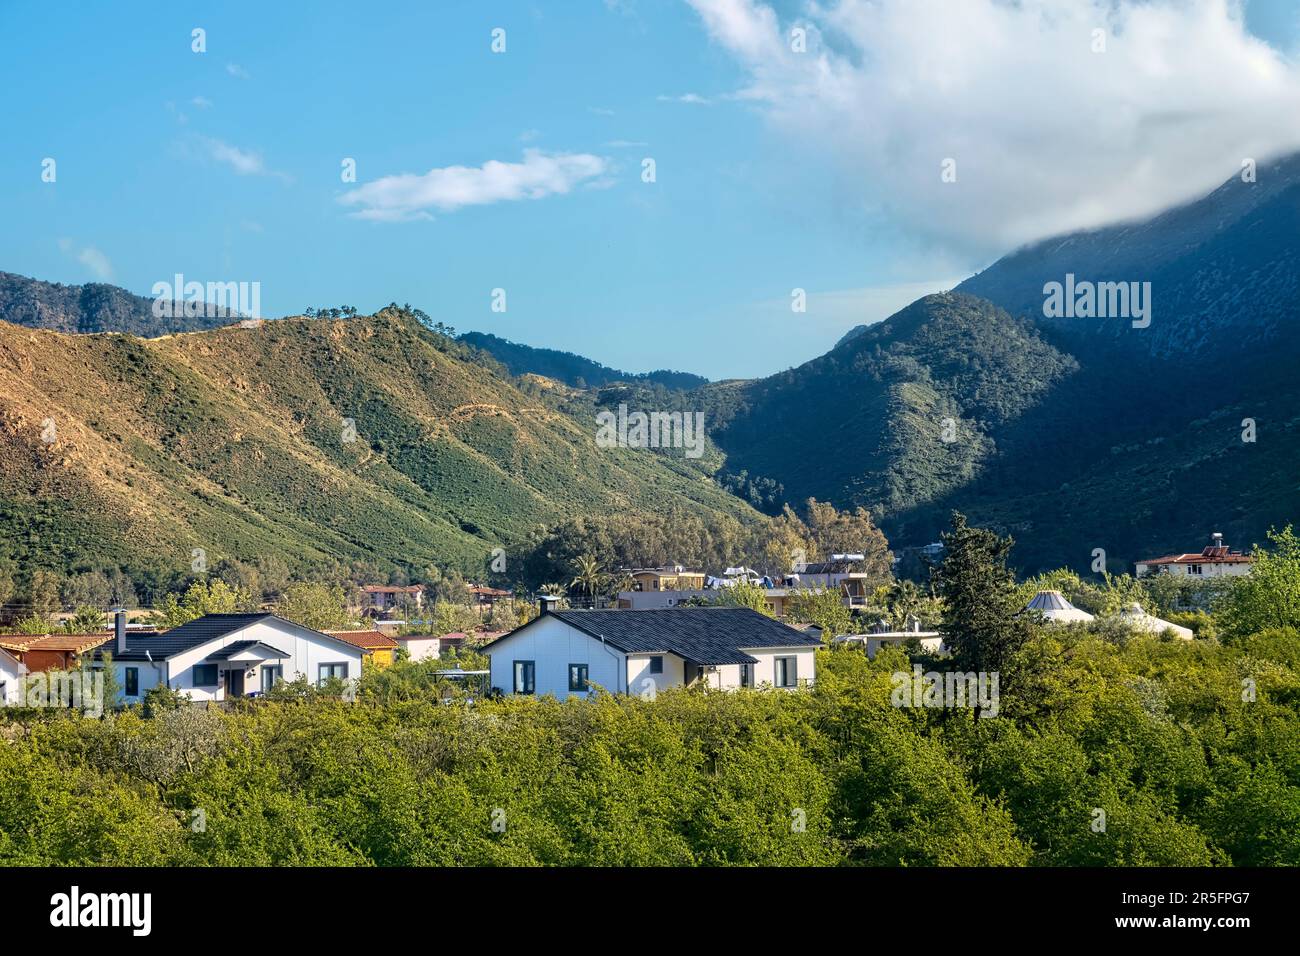 The Gelidonya Peninsula and mountains, seen from Adrasan, Turkey Stock Photo